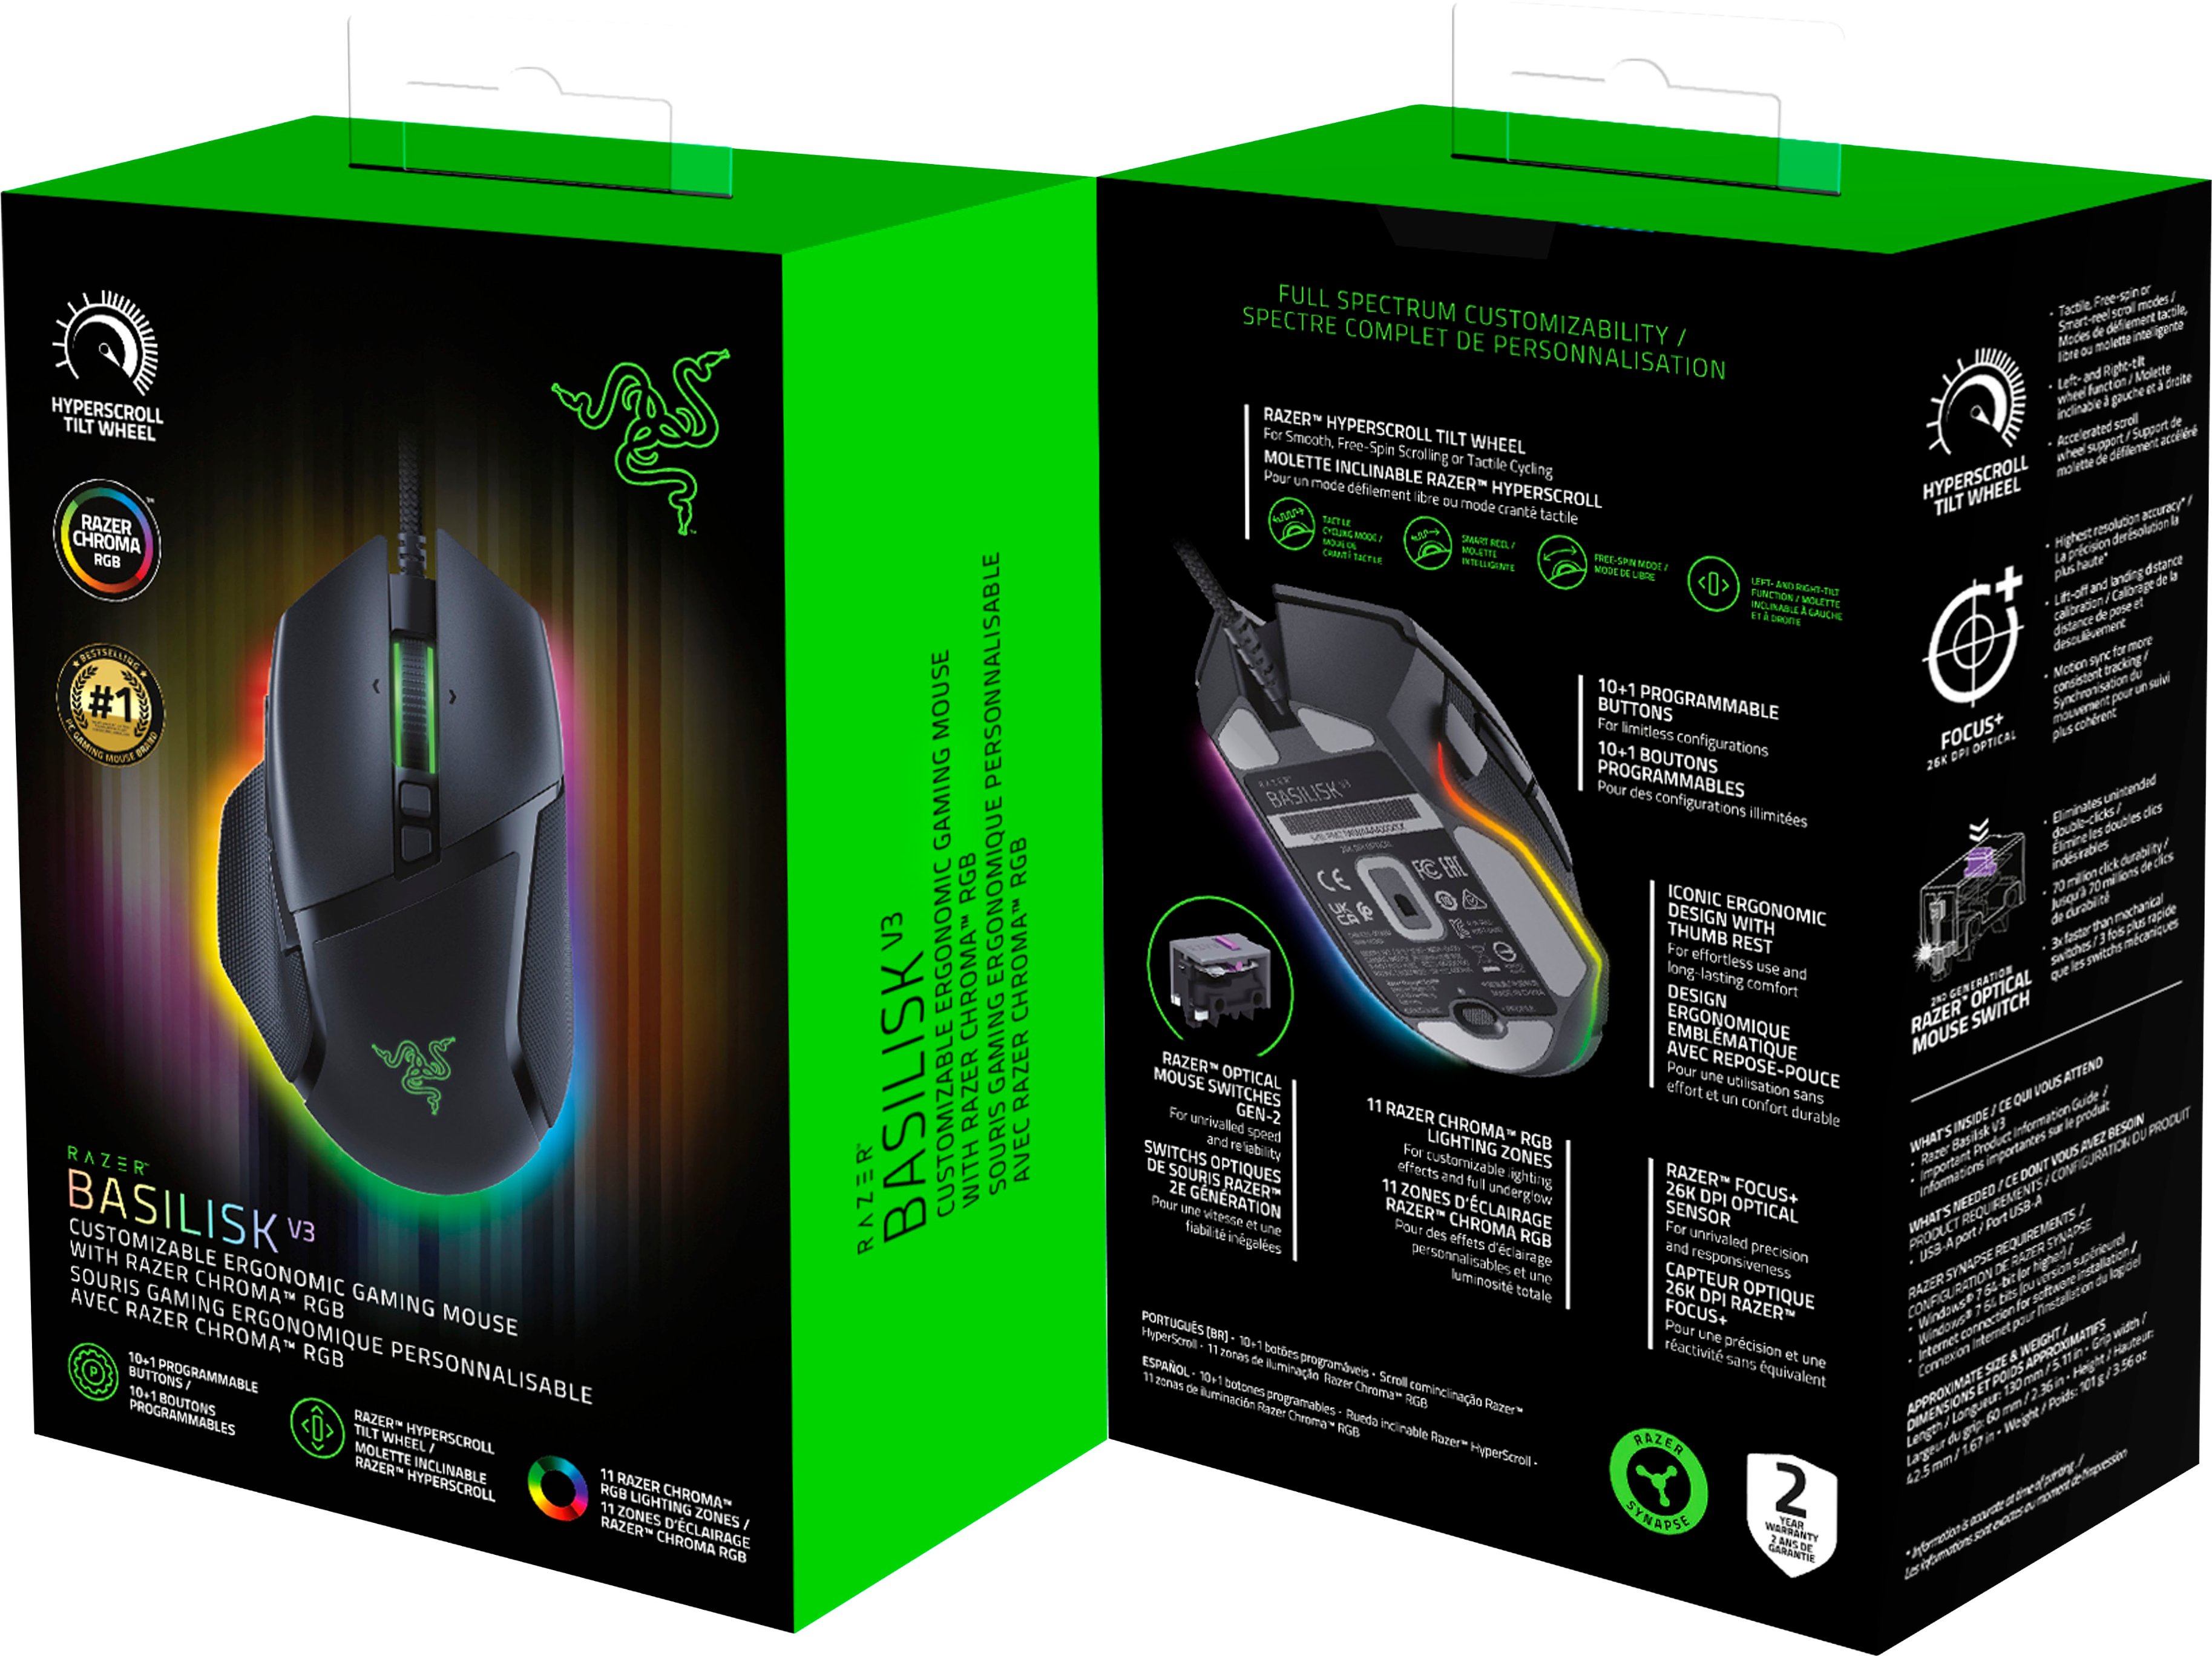 Razer Basilisk V3 Wired Optical Gaming Mouse with Chroma RBG